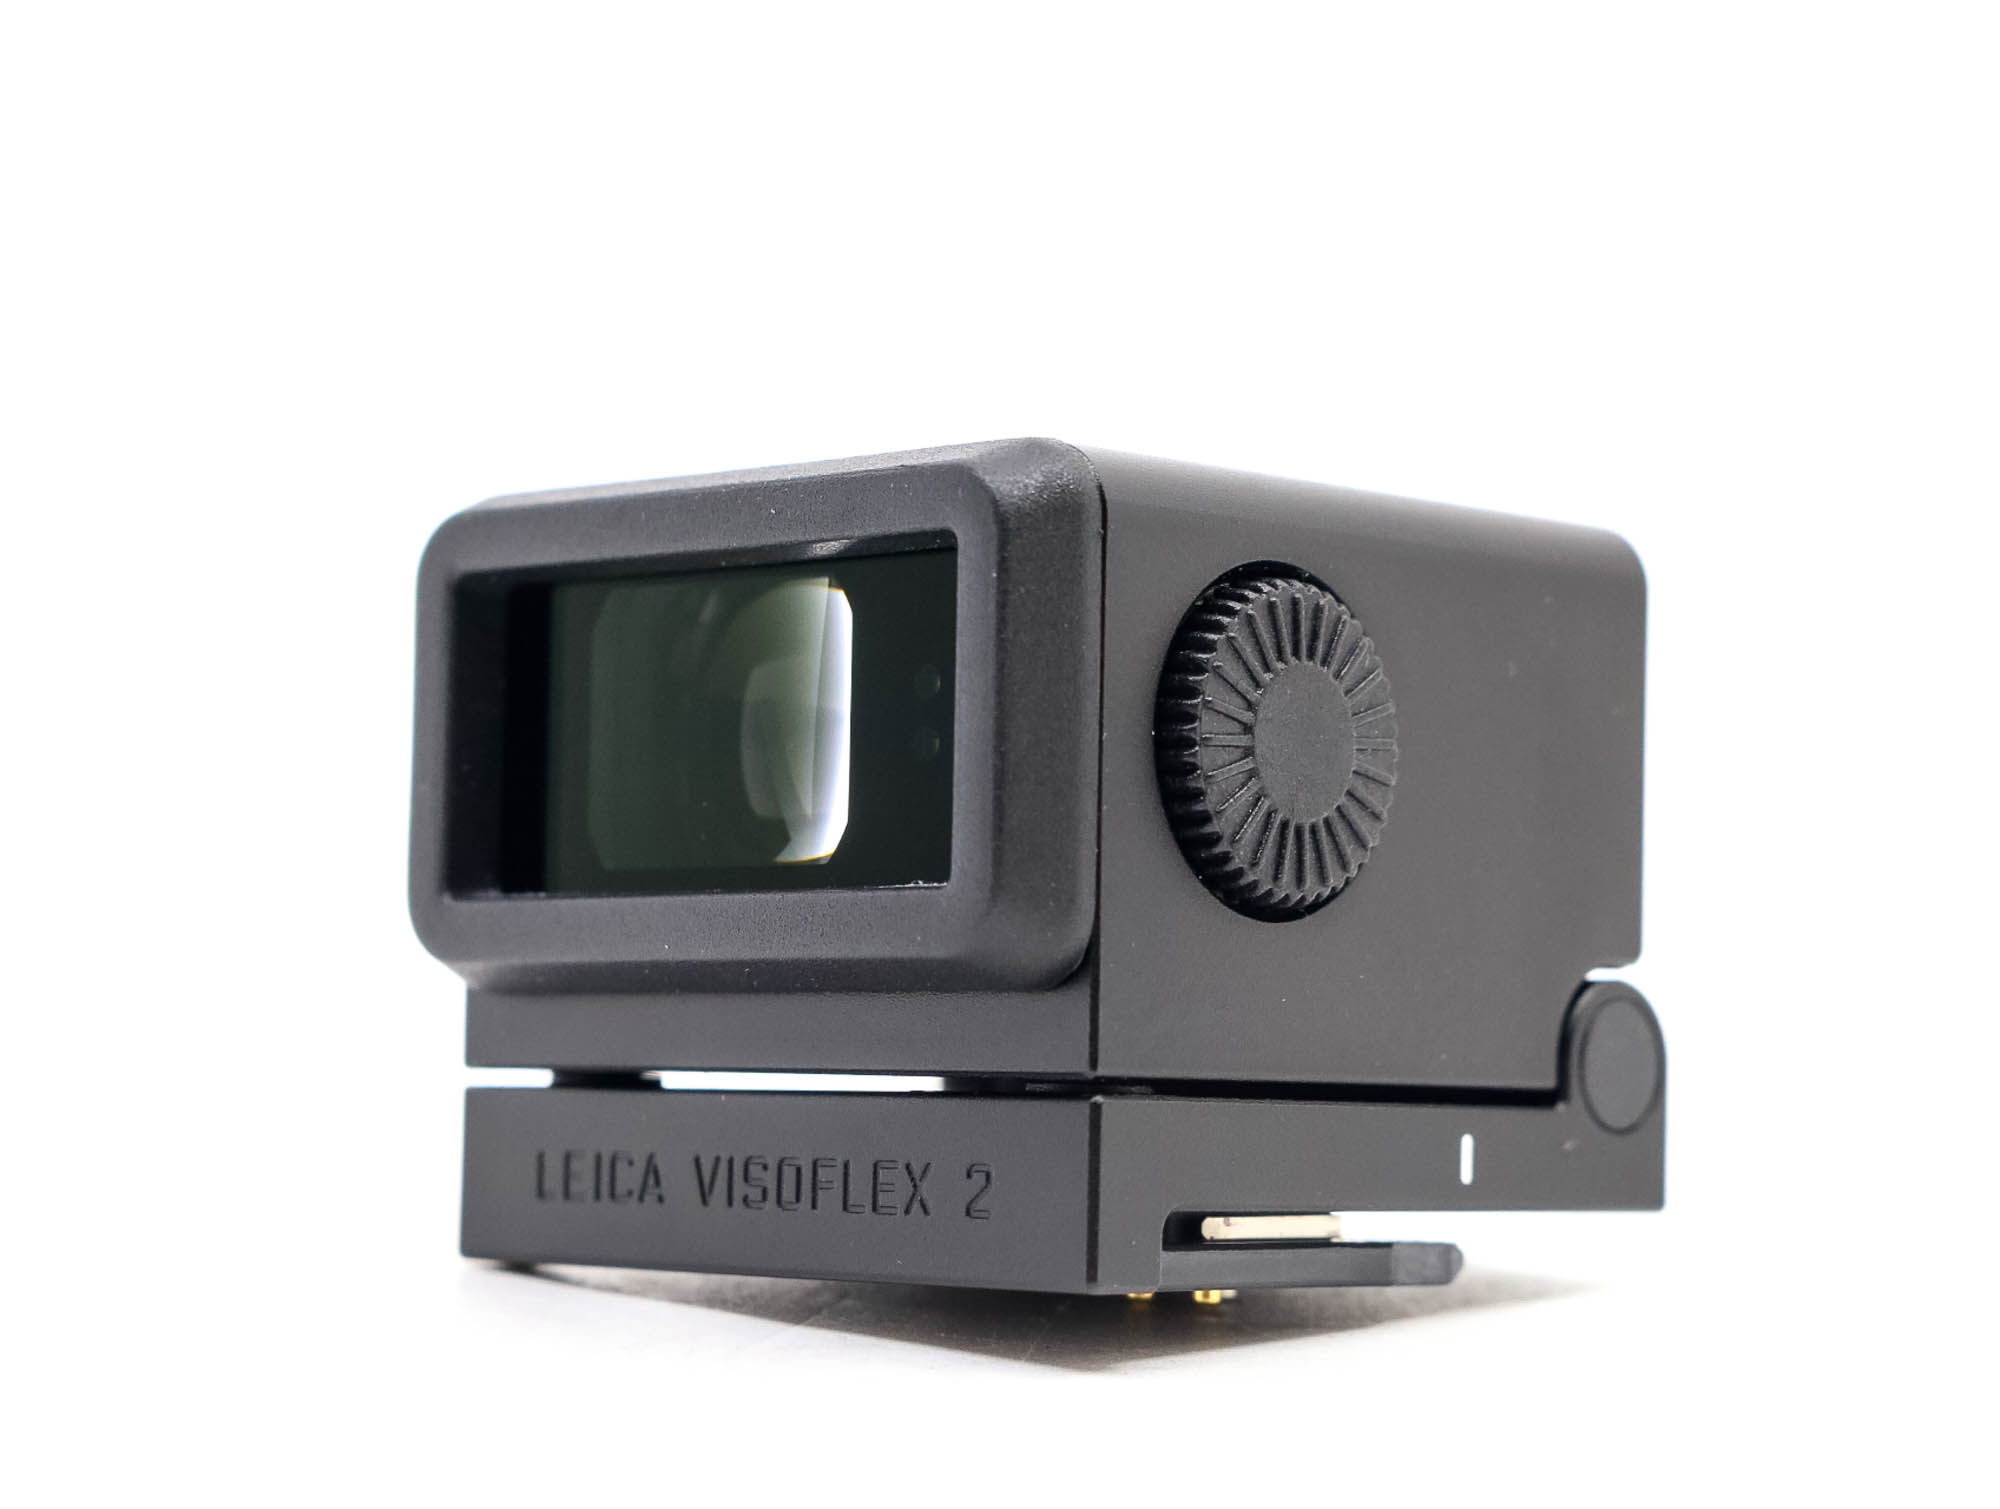 leica visoflex 2 electronic viewfinder (condition: excellent)